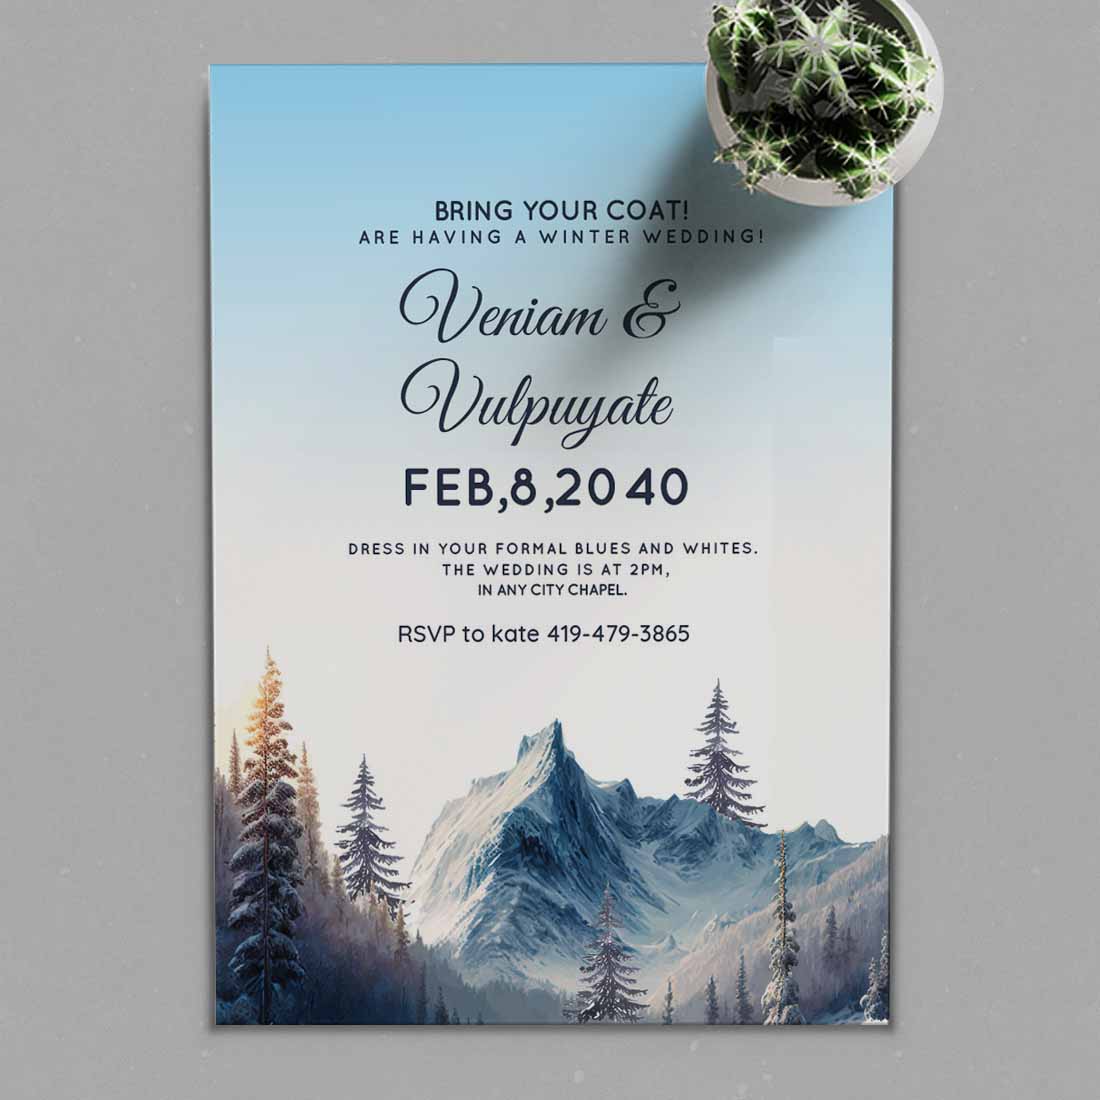 Image of amazing wedding card with winter design